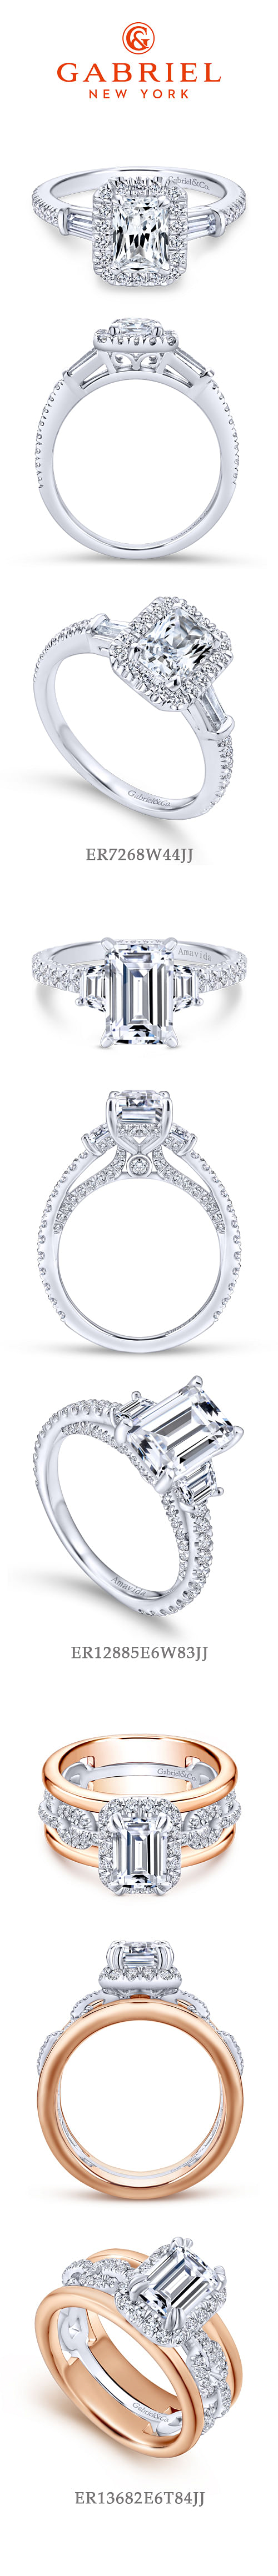 14K White Gold Three Stone Halo Emerald Cut Diamond Engagement Ring angle 